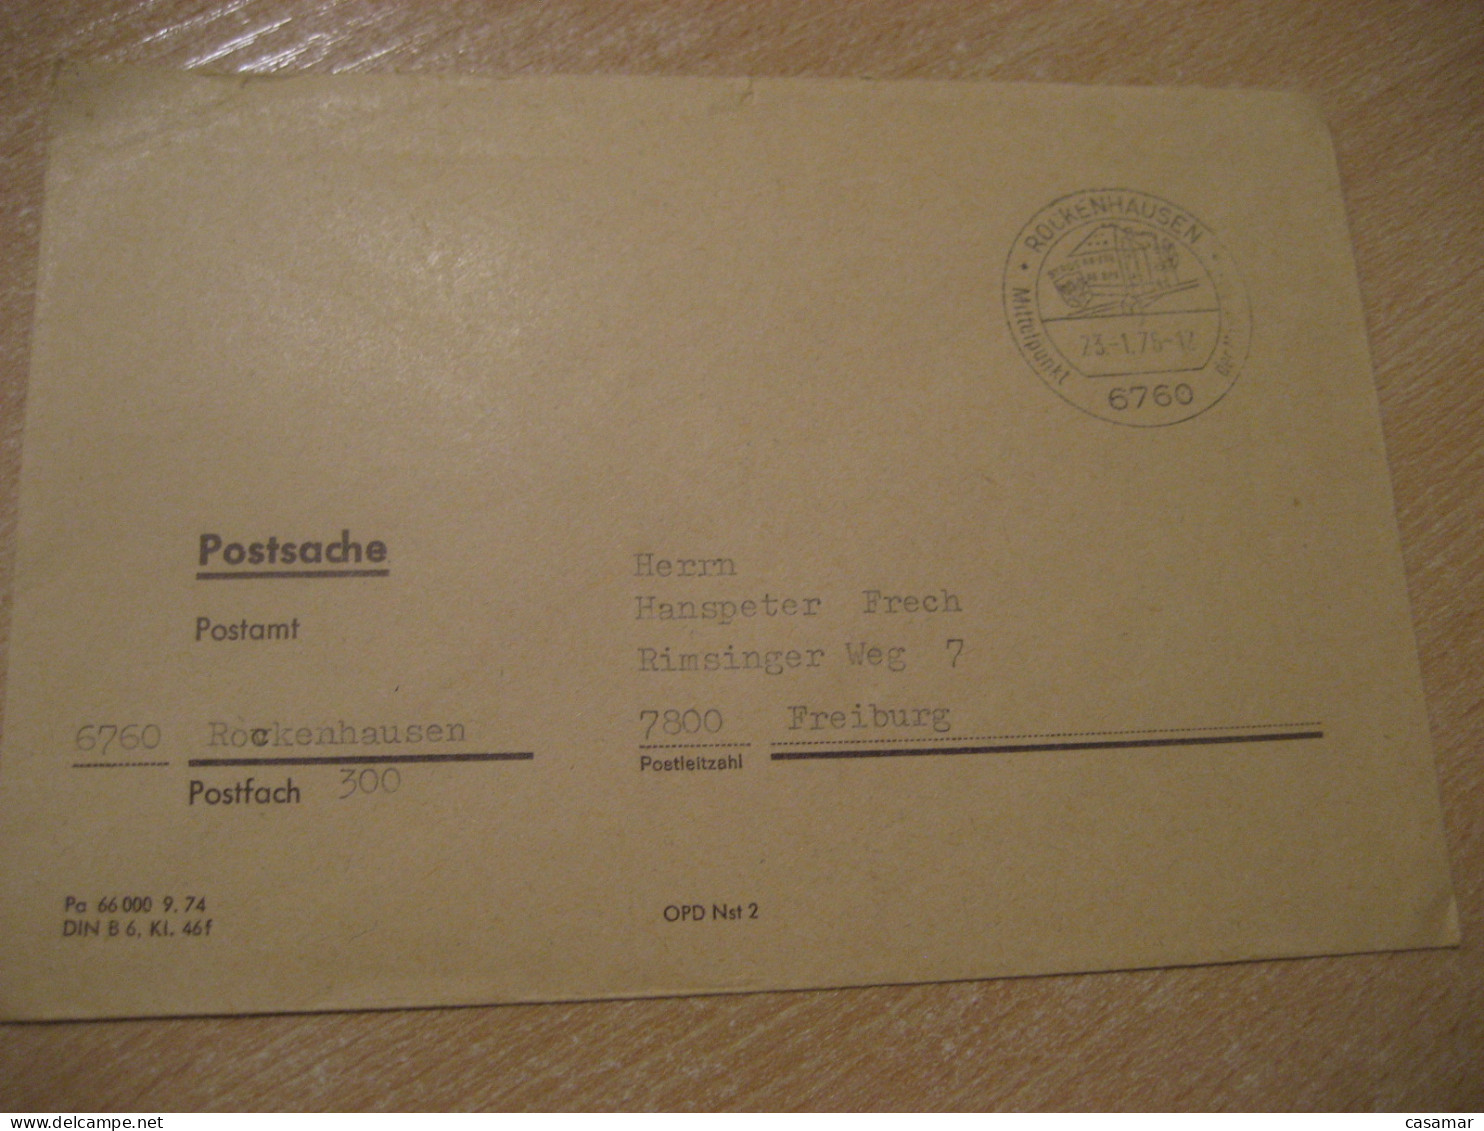 ROCKENHAUSEN 1976 To Freiburg Postage Paid Cancel Cover GERMANY - Briefe U. Dokumente